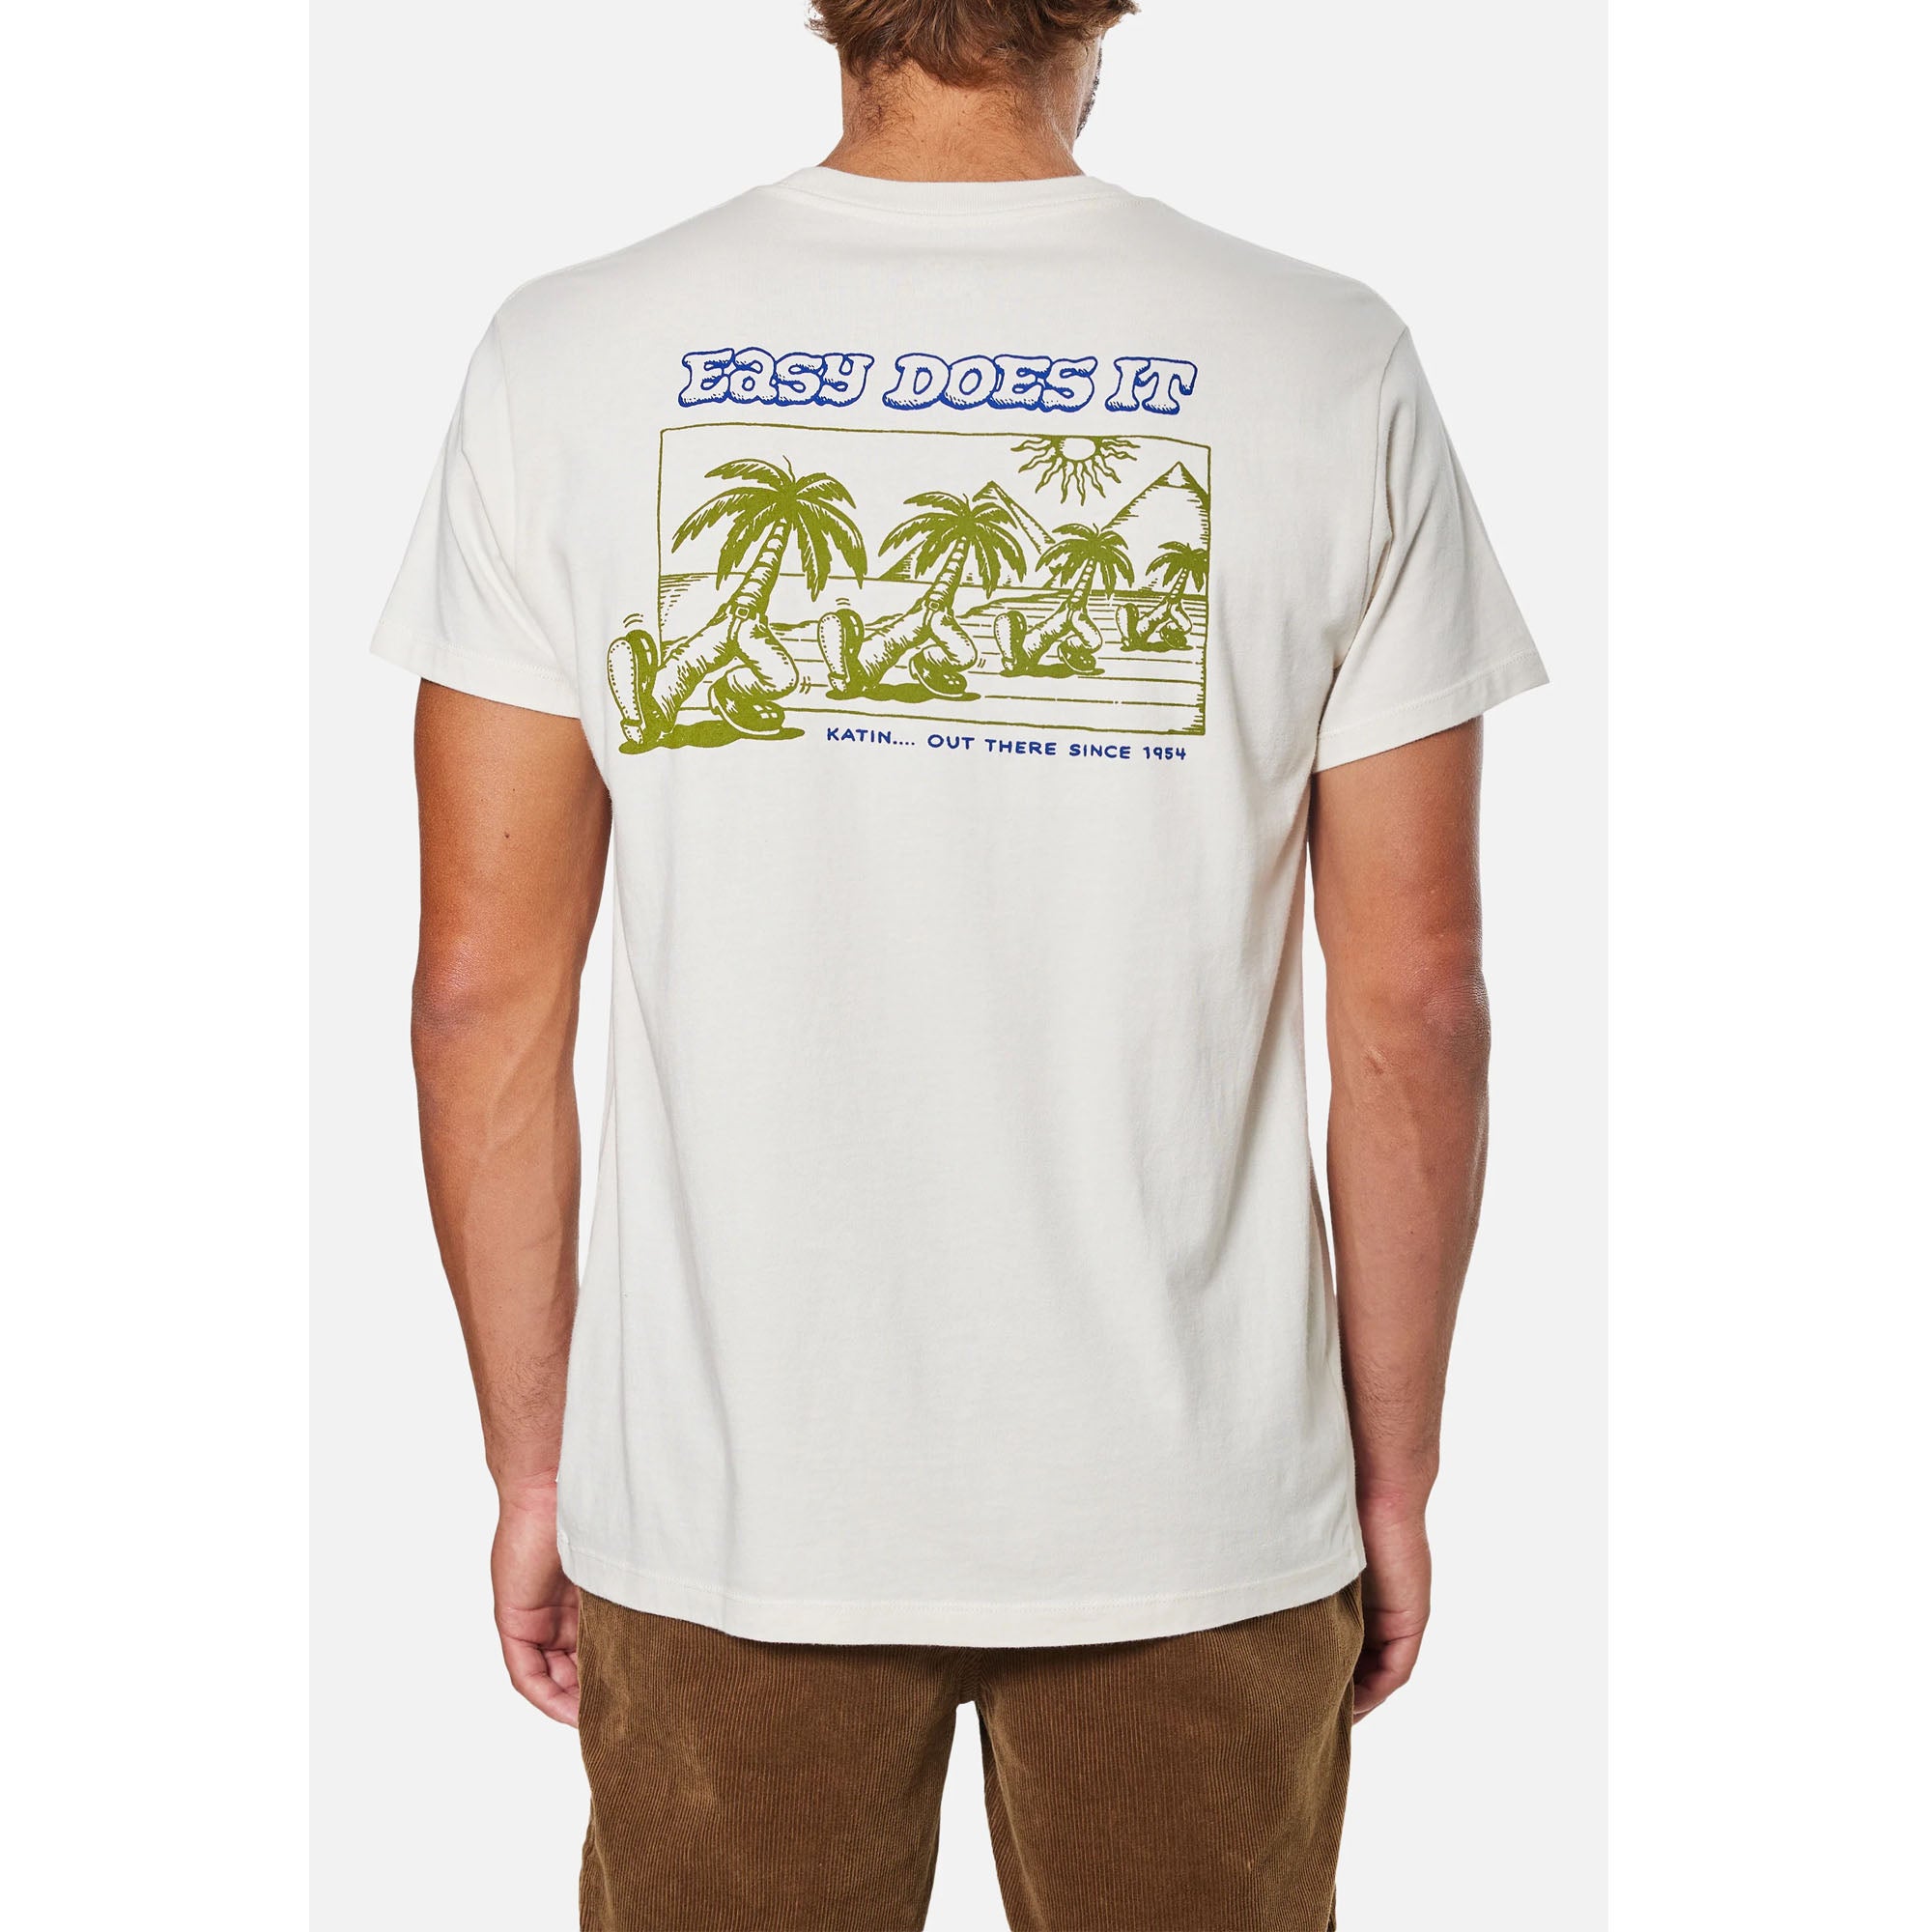 Katin Stroll Men's S/S T-Shirt